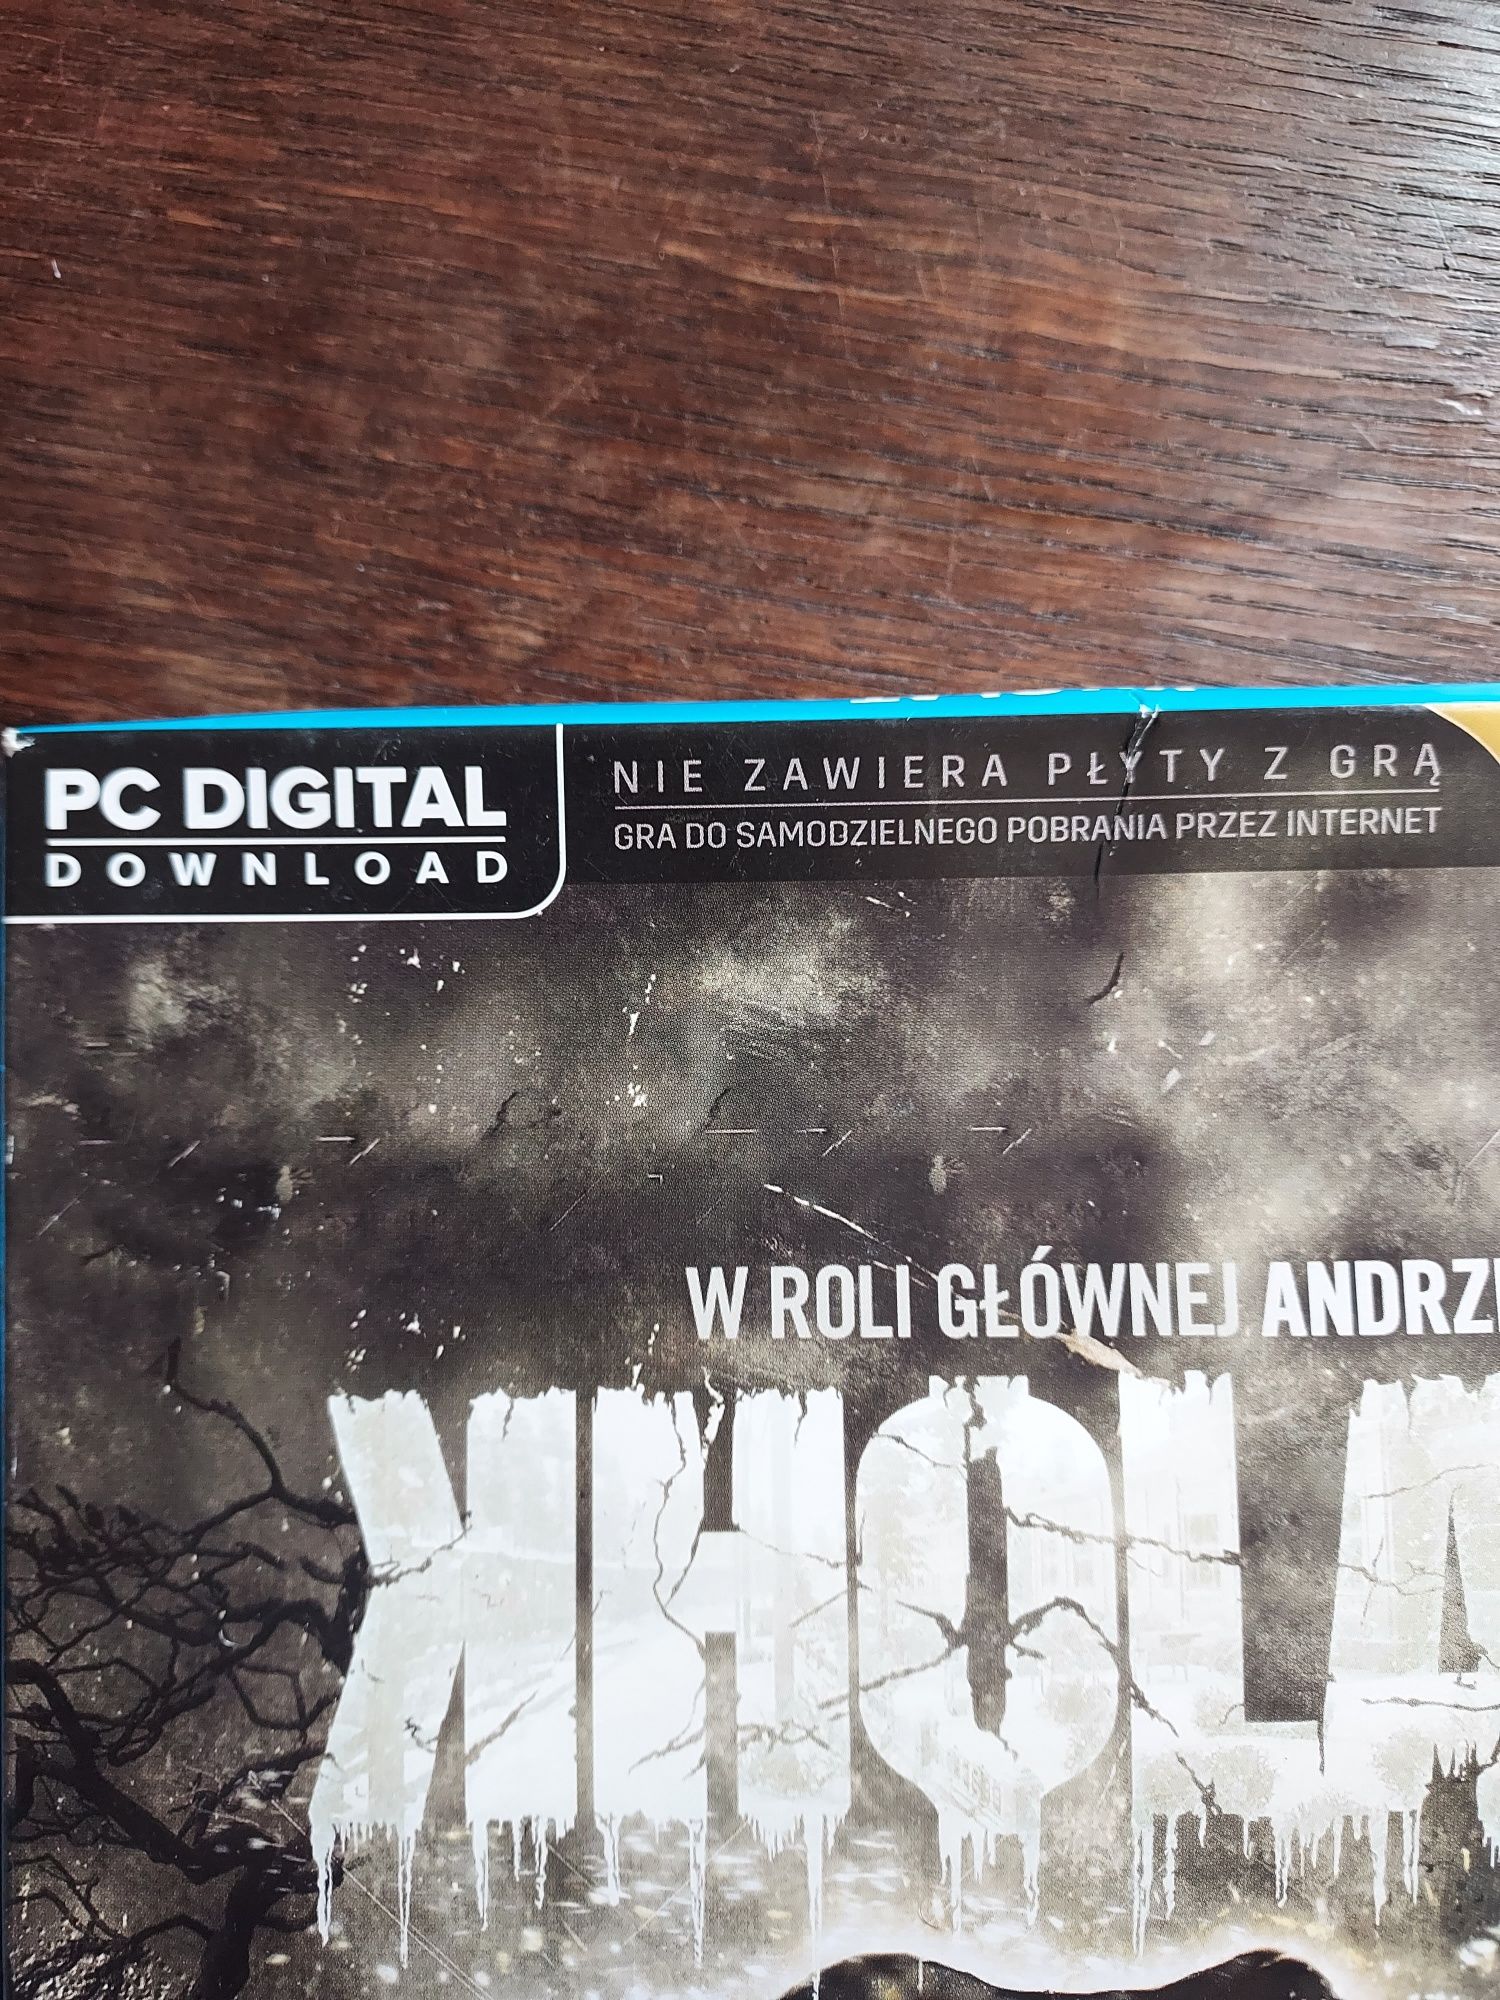 "Kholat" gra na PC w wersji cyfrowej